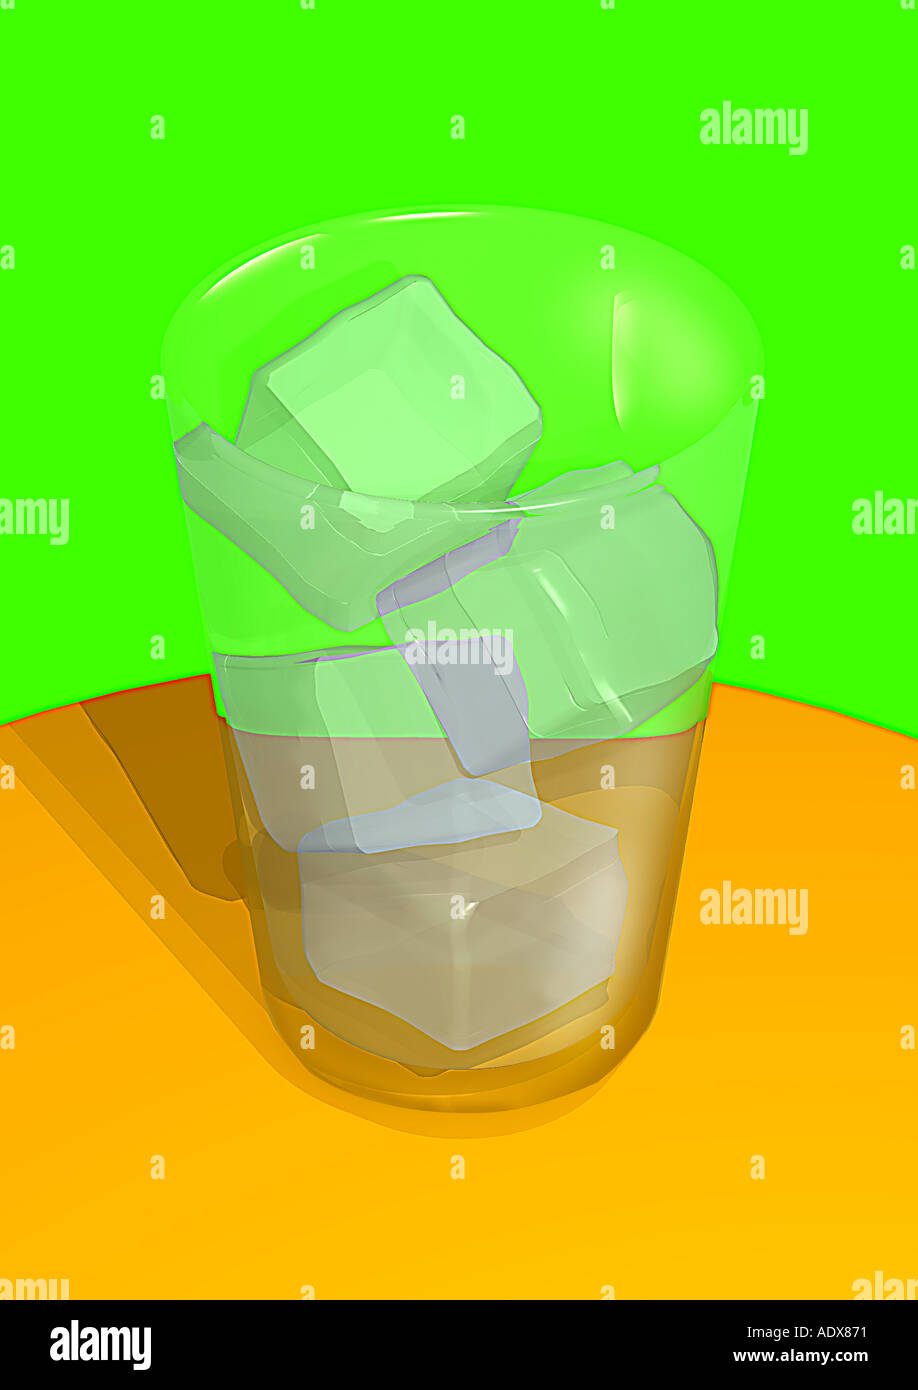 Illustrations stylized green orange ice cubes icecubes cube invisible virtual image empty glass rocks miscellaneous backgrou Stock Photo